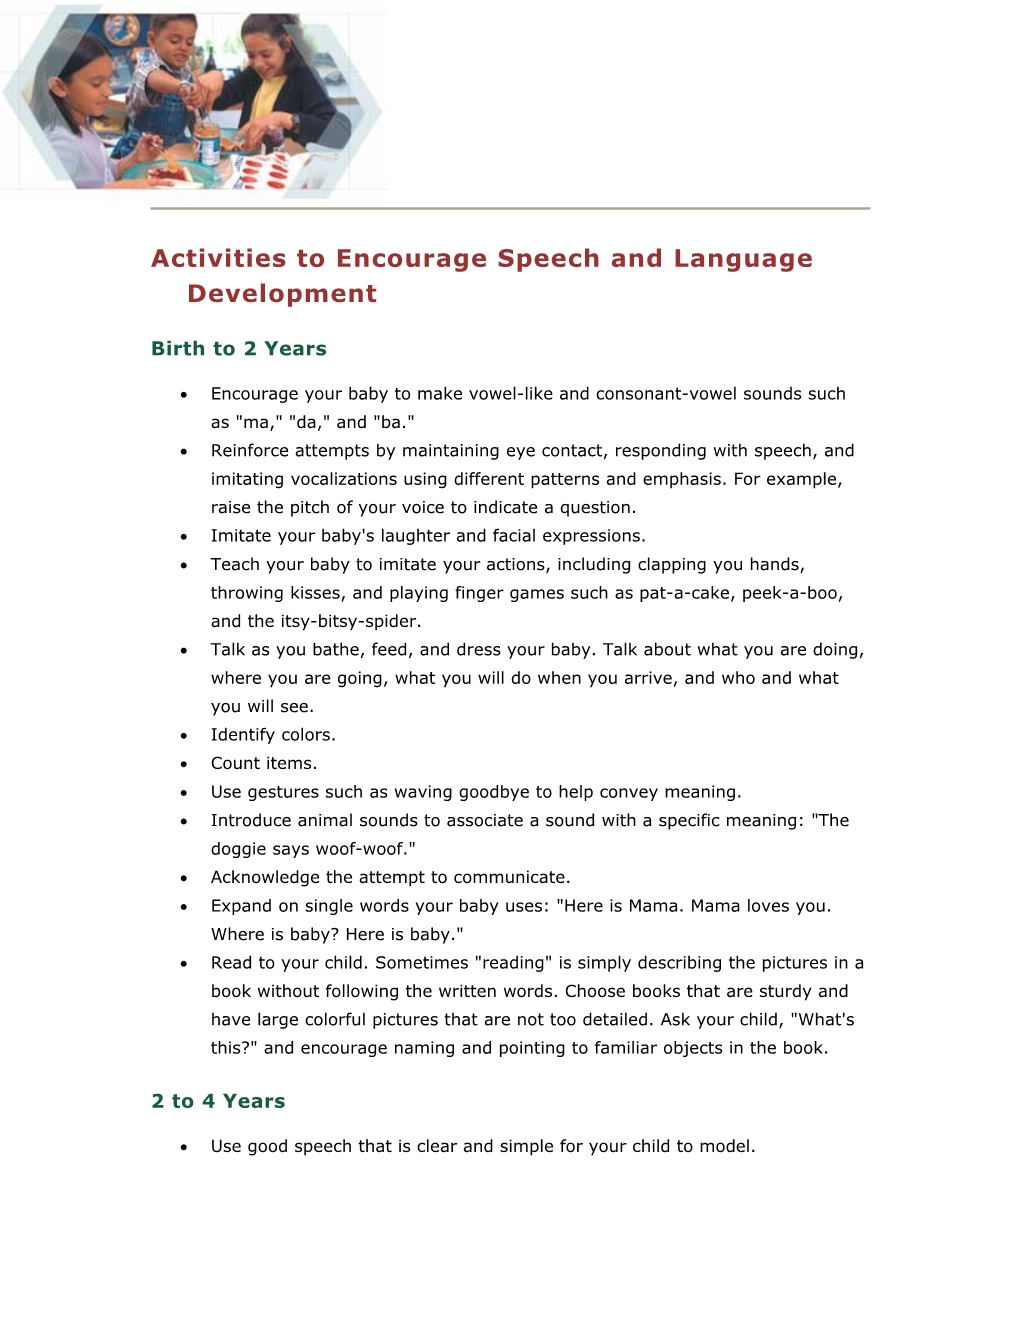 Activities to Encourage Speech and Language Development